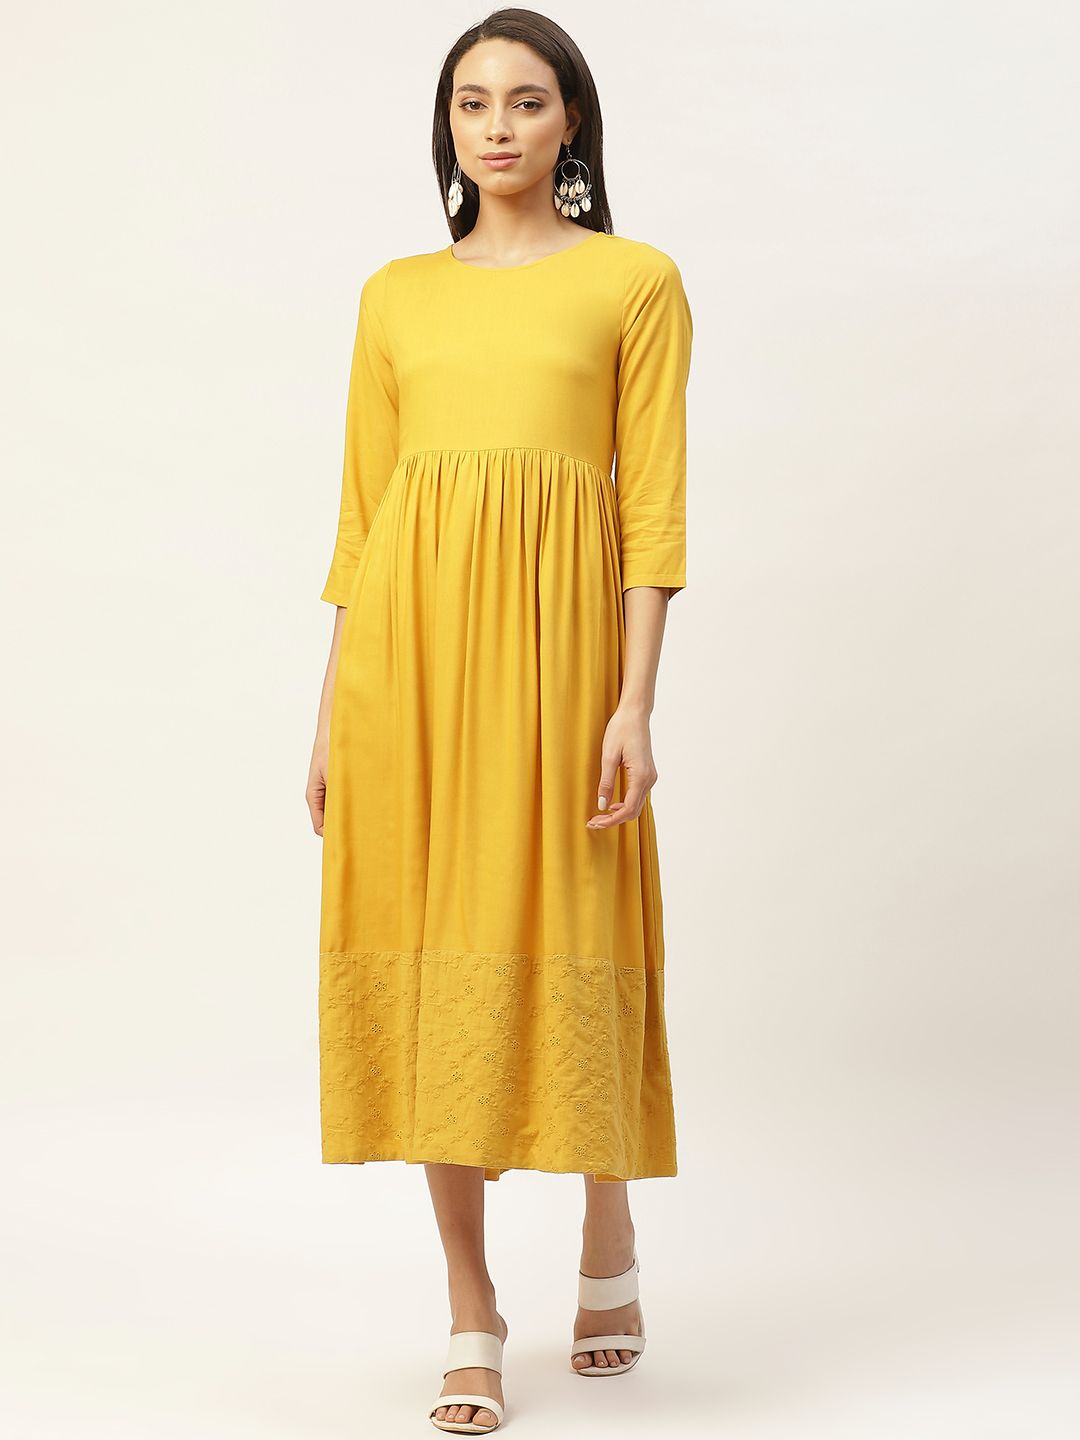 Shae by SASSAFRAS Women Mustard Yellow Solid A-Line Dress With Schiffli Detail Price in India